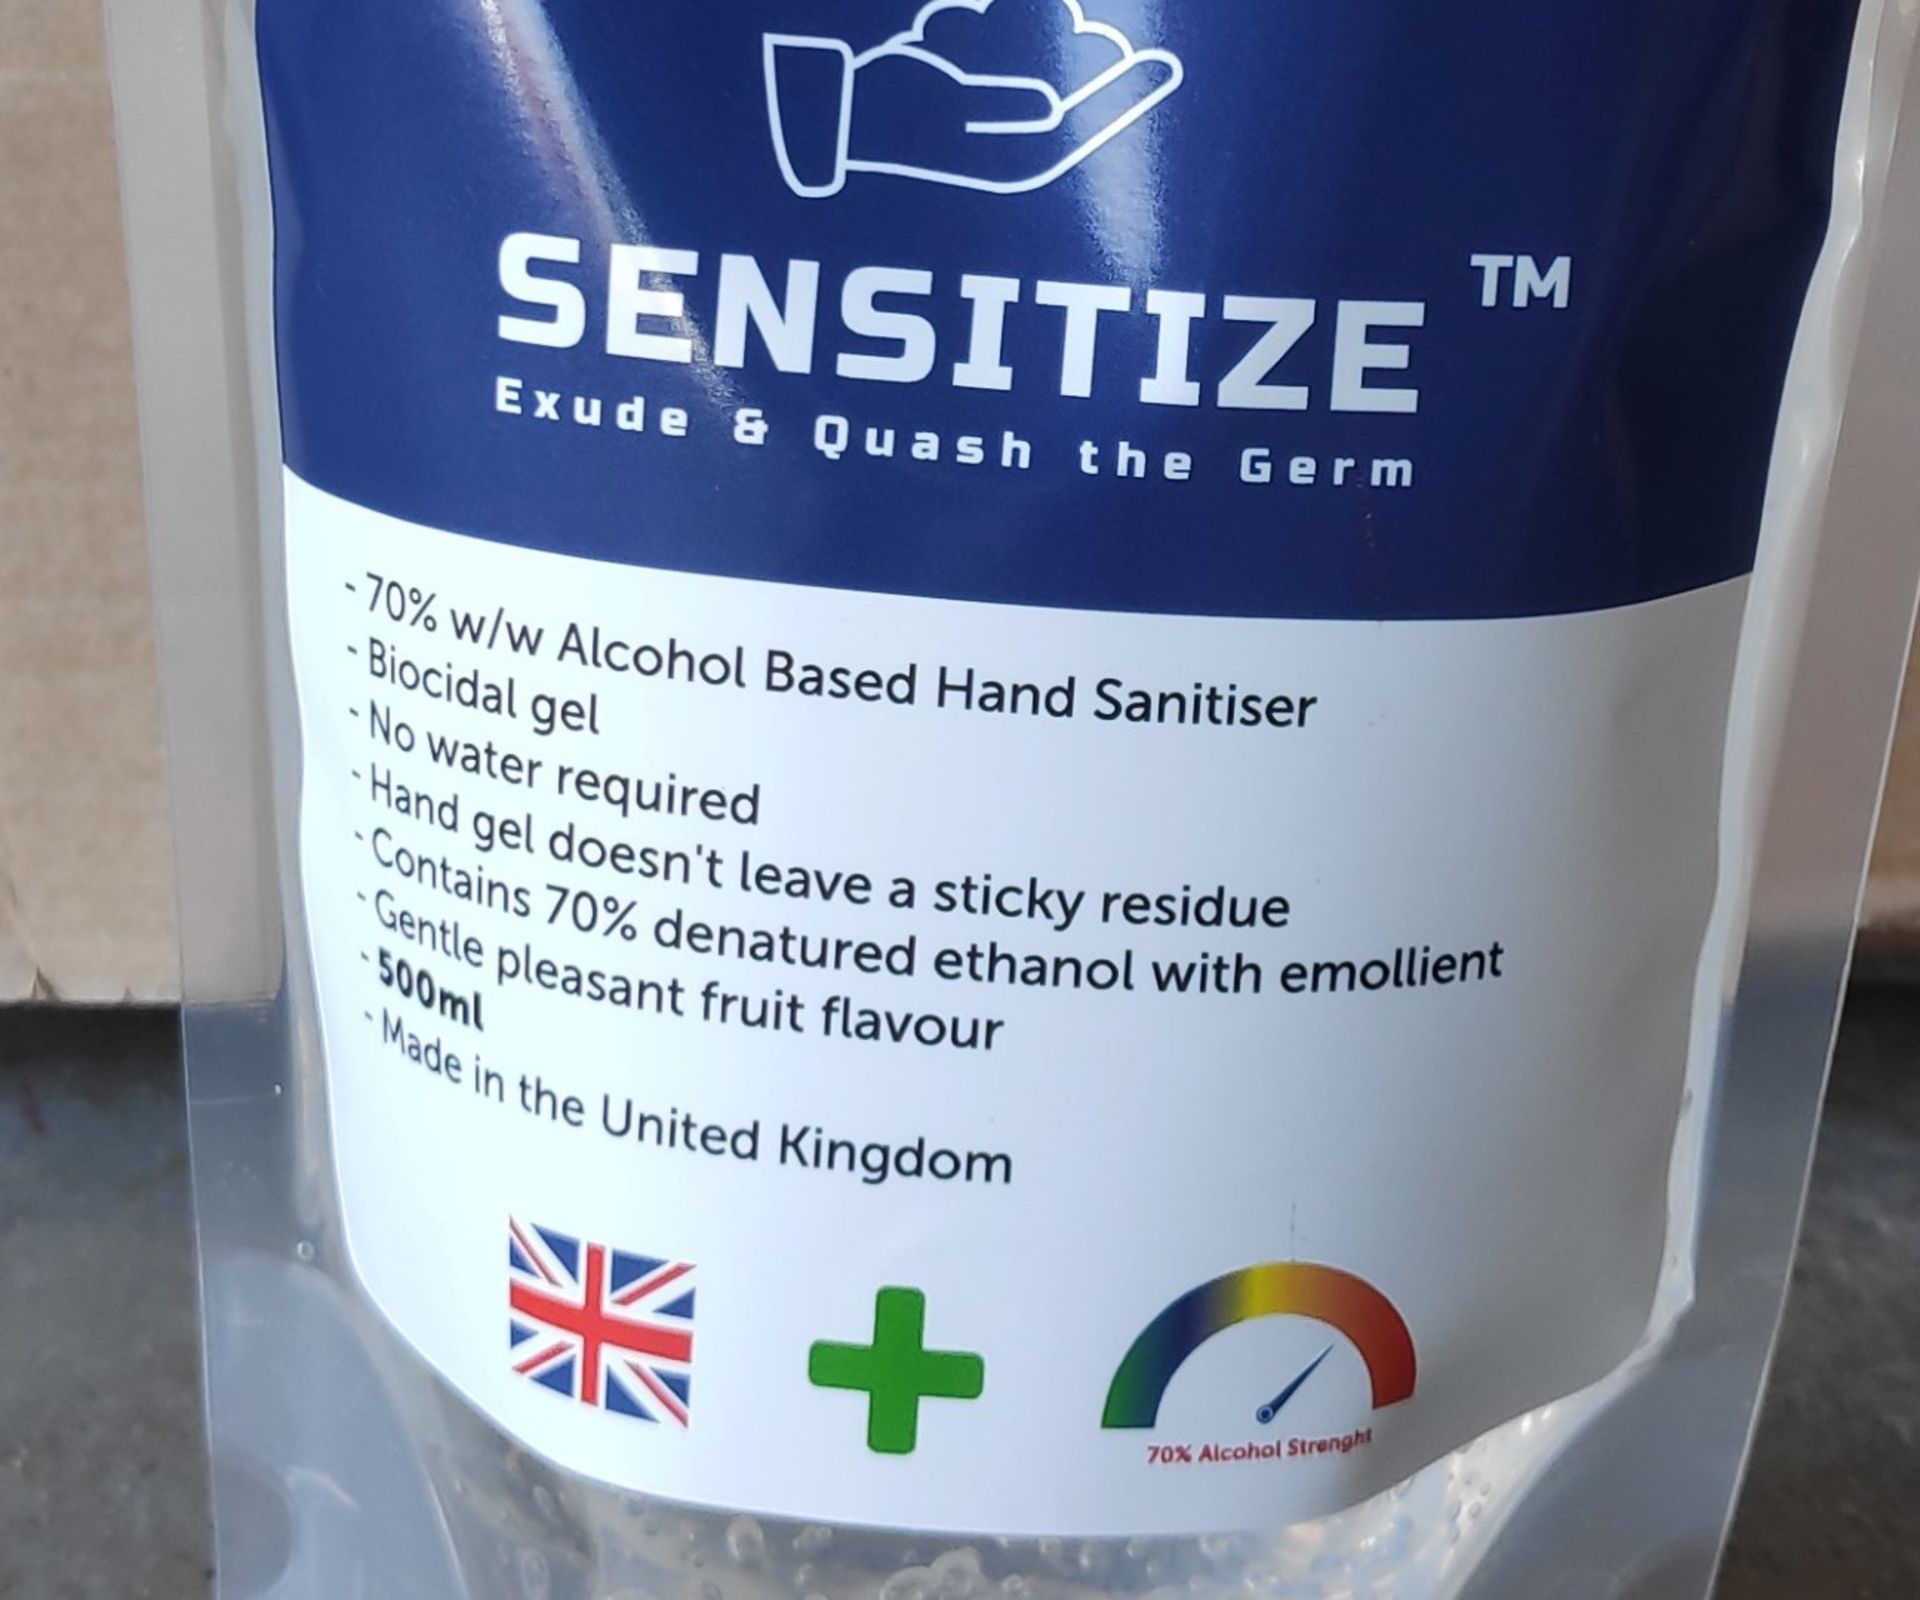 320 Pouches of Sensitize Hand Sanitizer - 500ml, 70% Alcohol, Hospital Grade Sanitizer - CL513 - - Image 2 of 4